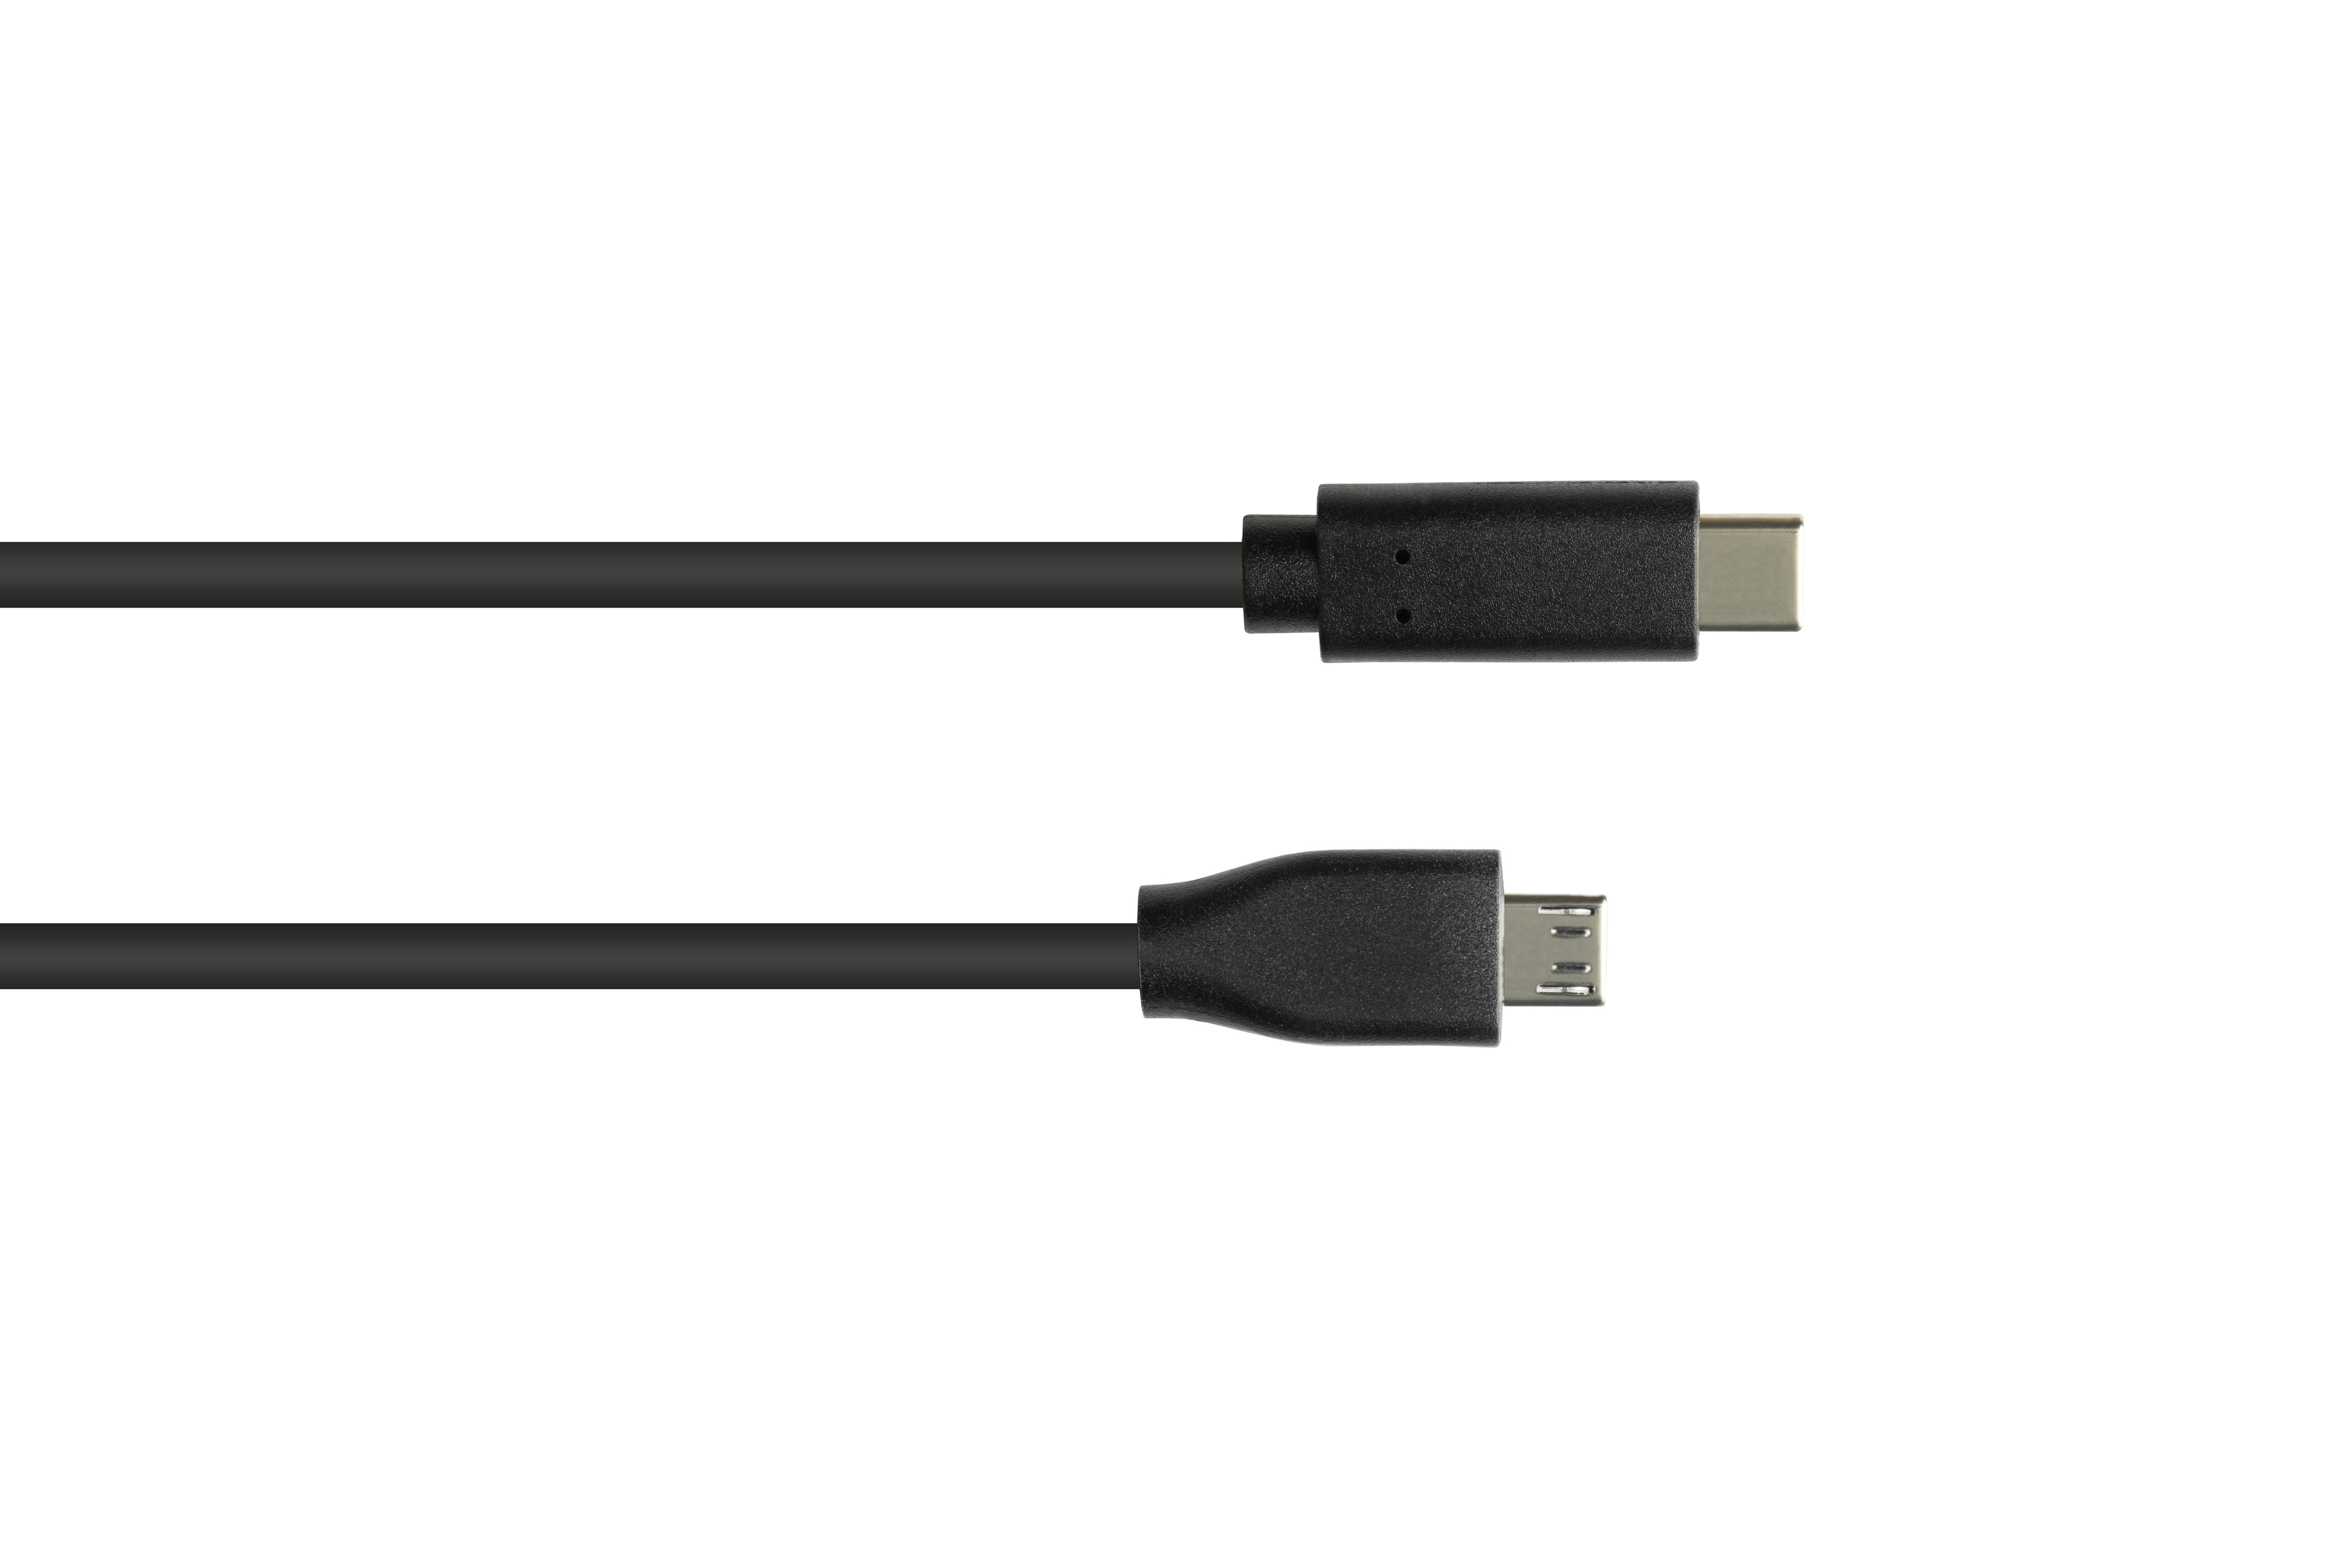 B USB Micro USB-C™ an 2.0 2.0, schwarz Stecker CONNECTIONS USB , GOOD CU, Stecker Anschlusskabel